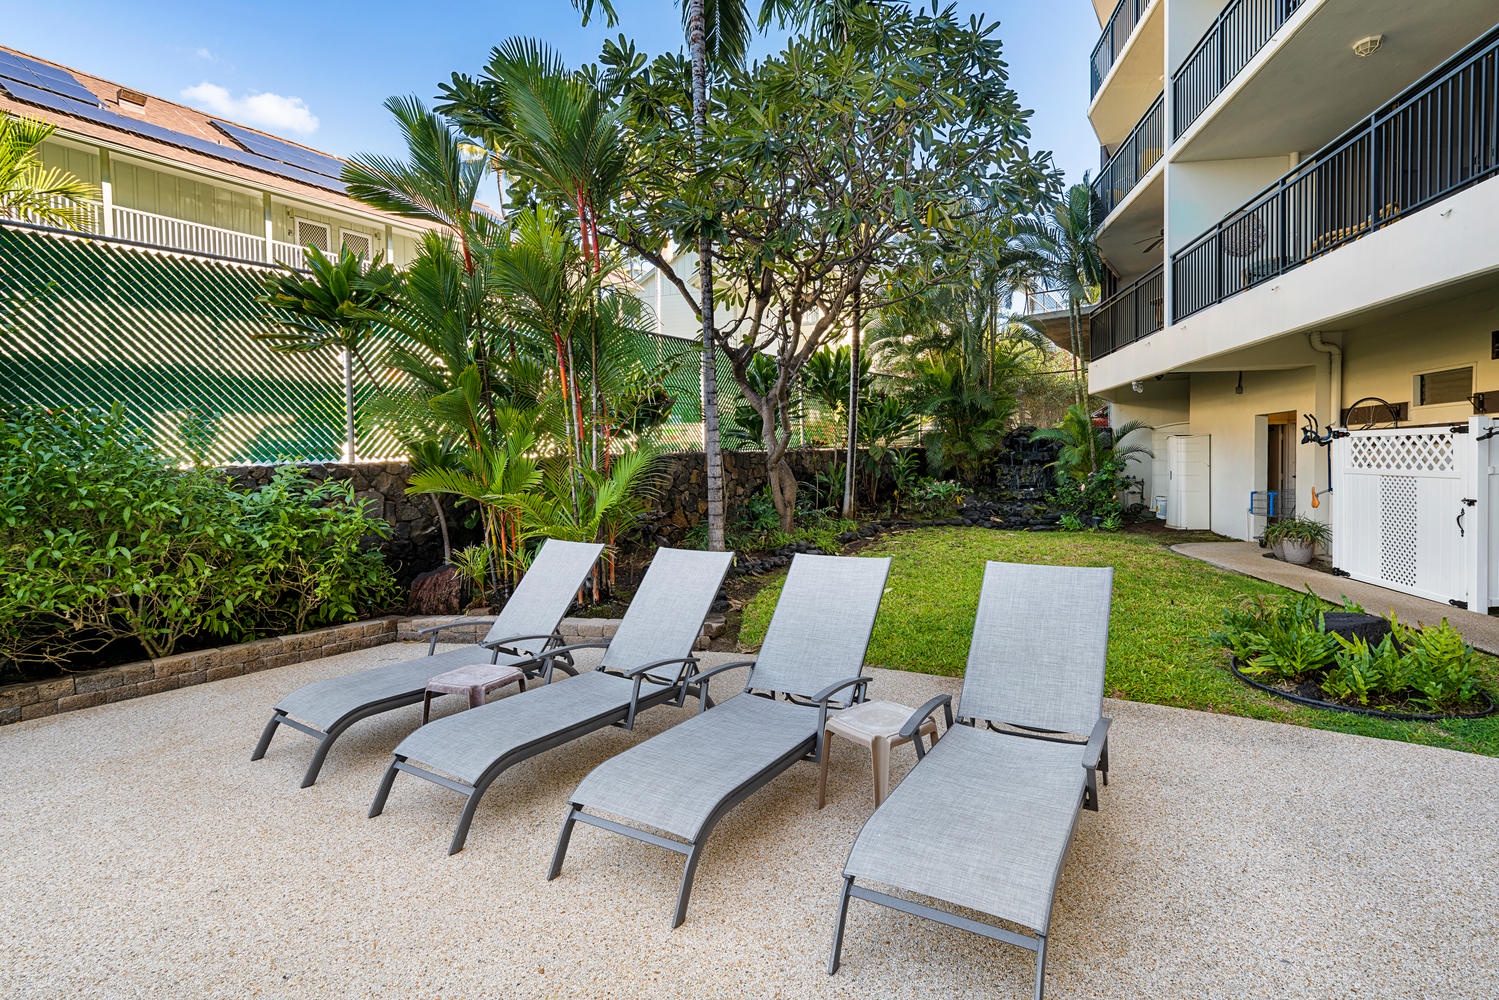 Kailua Kona Vacation Rentals, Kona Alii 512 - With sun loungers for you to enjoy sun bathing.